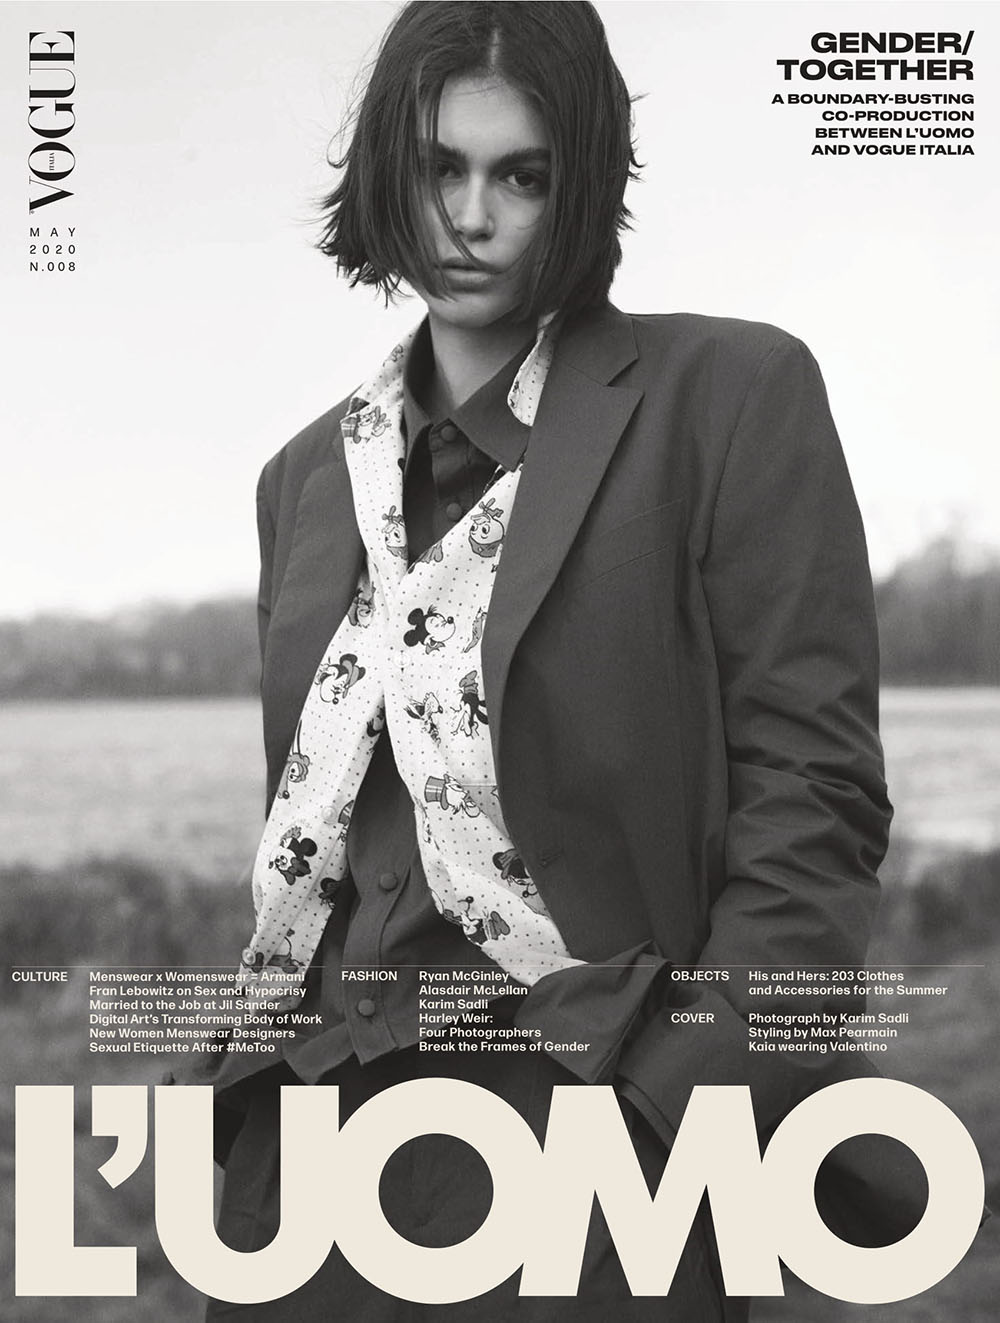 Kaia Gerber covers Vogue Italia and L’Uomo Vogue May 2020 by Karim Sadli